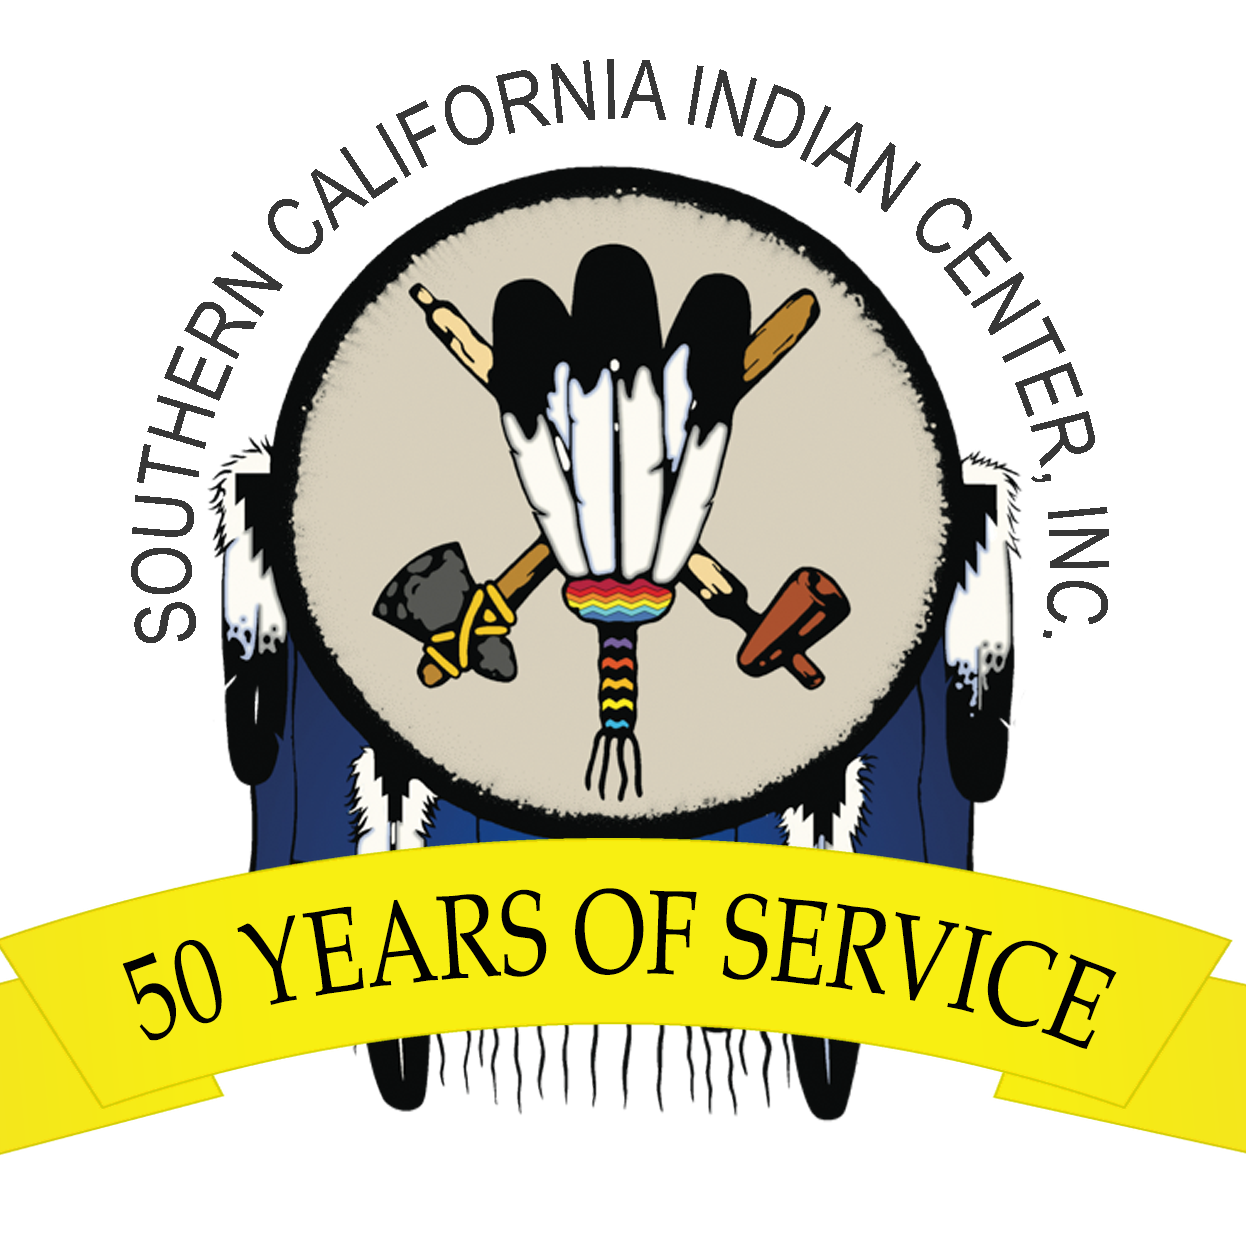 Native American Organization in San Francisco California - Southern California Indian Center, Inc.